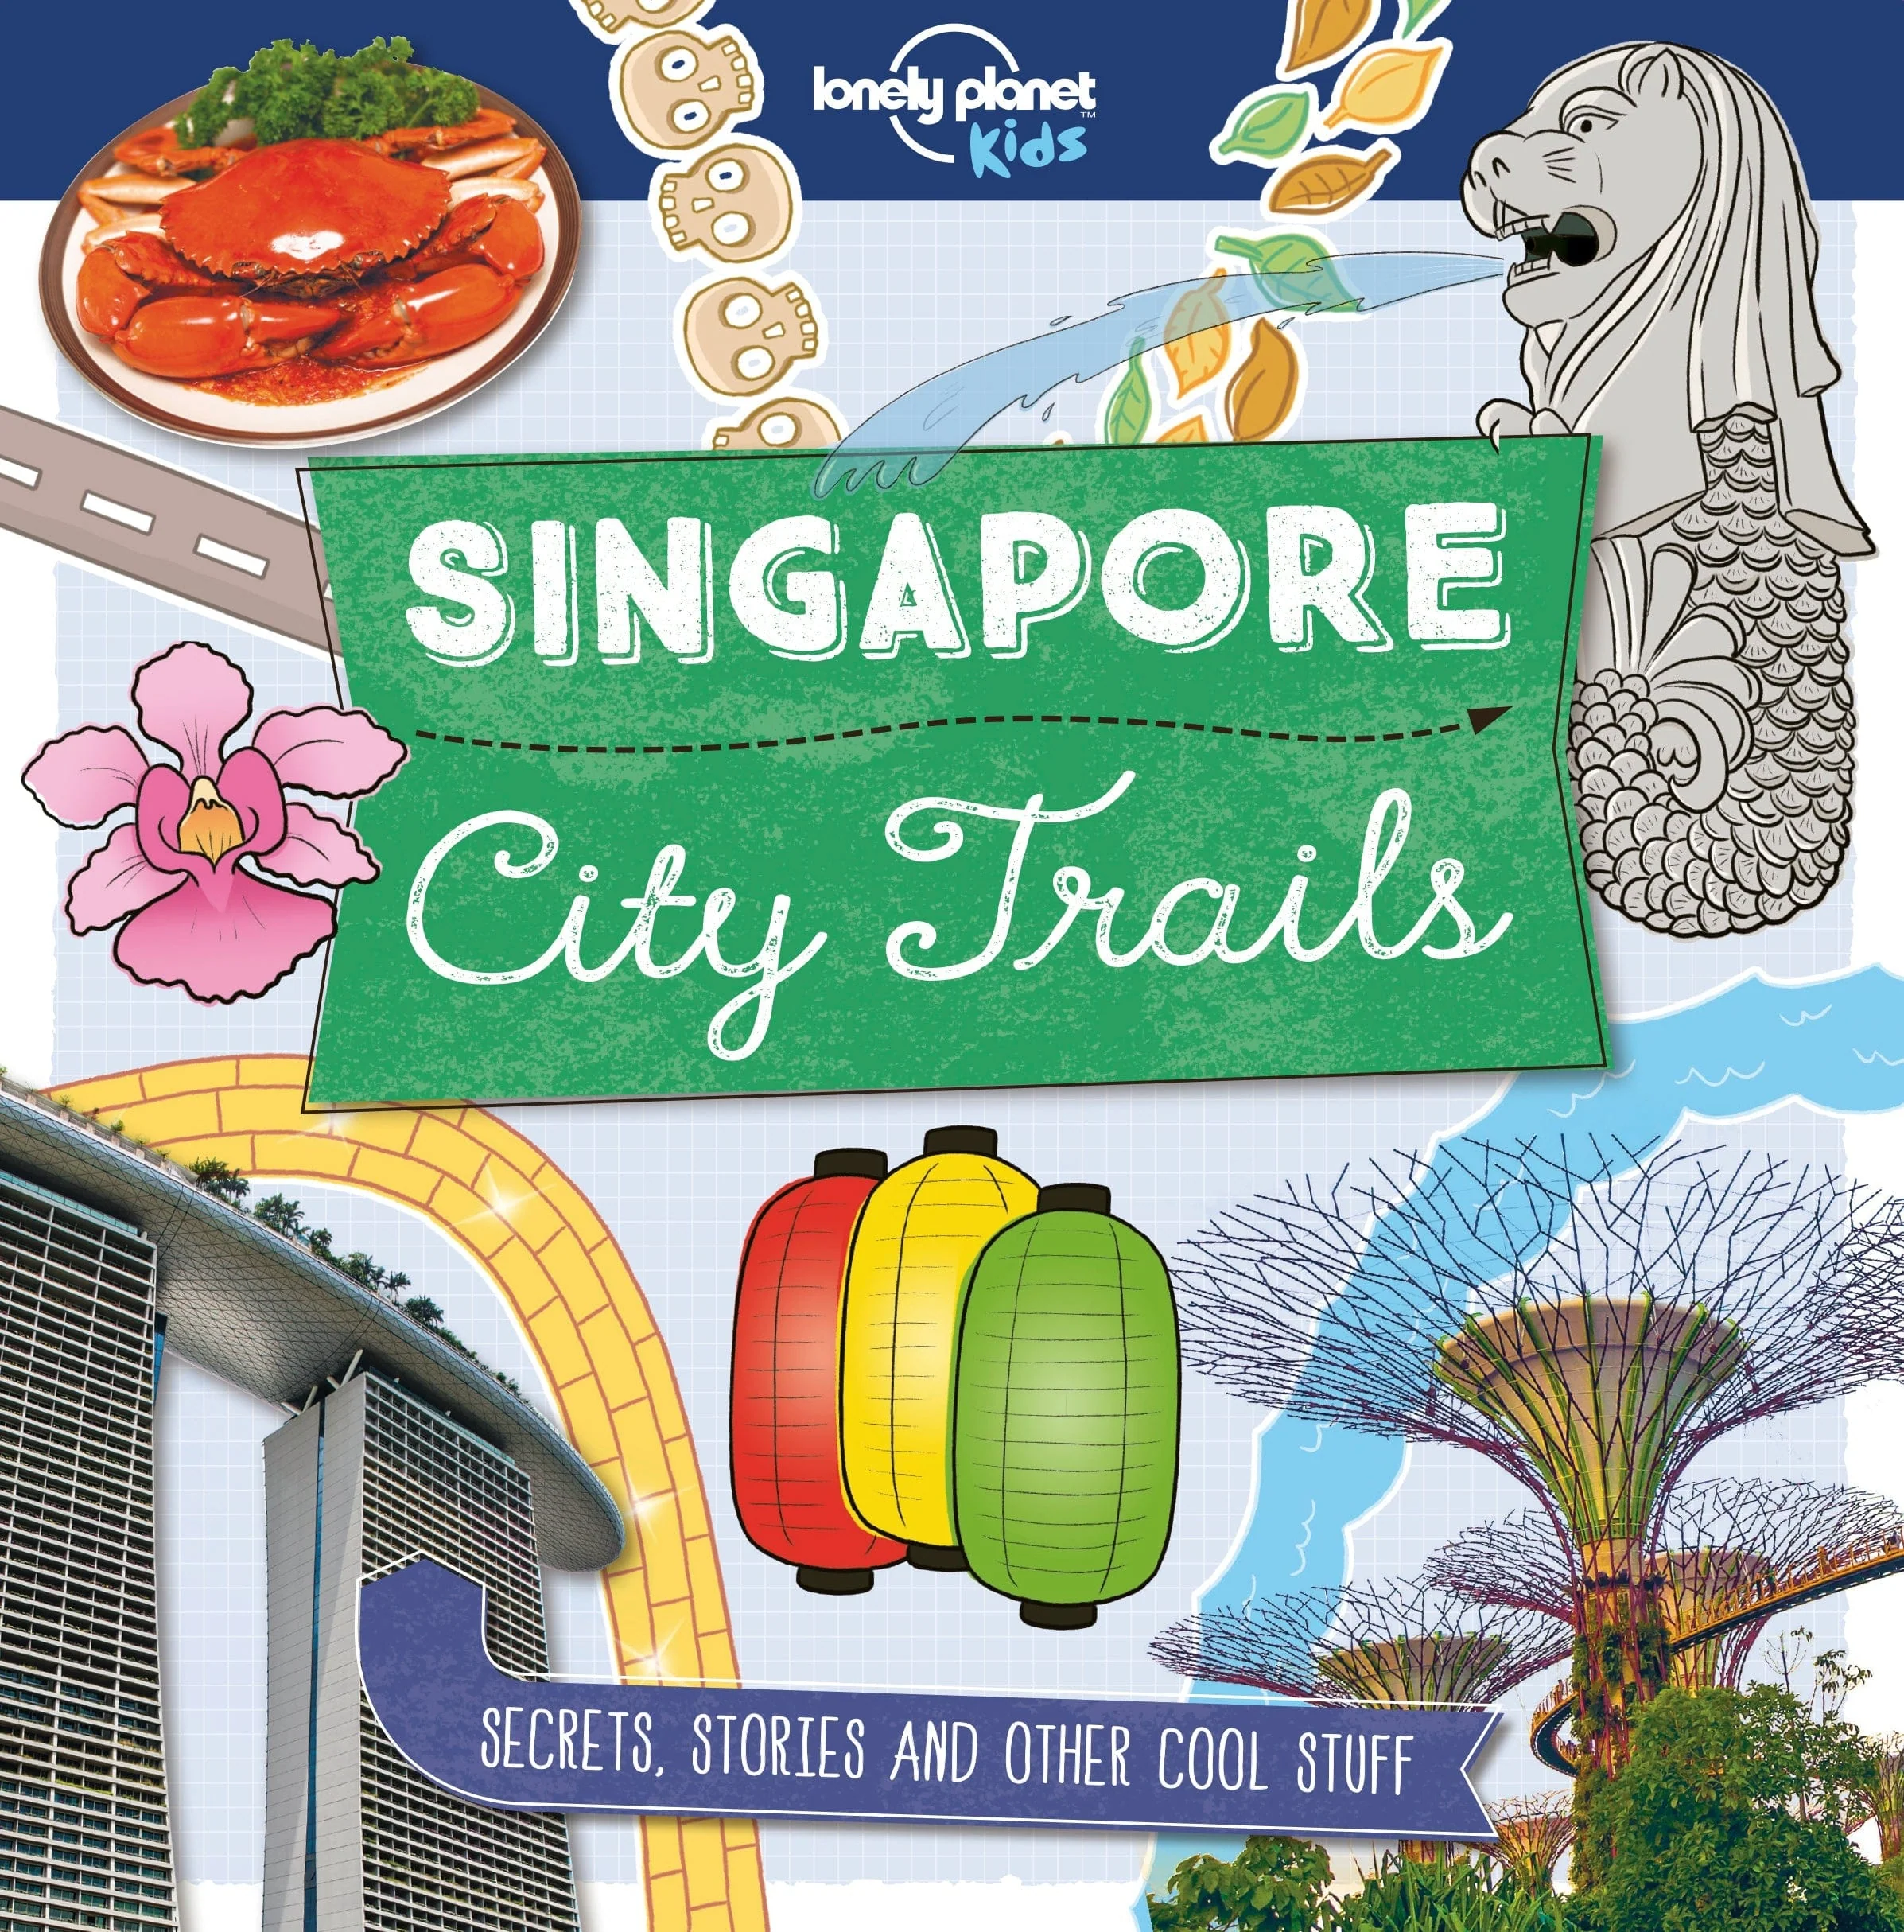 City Trails: Singapore